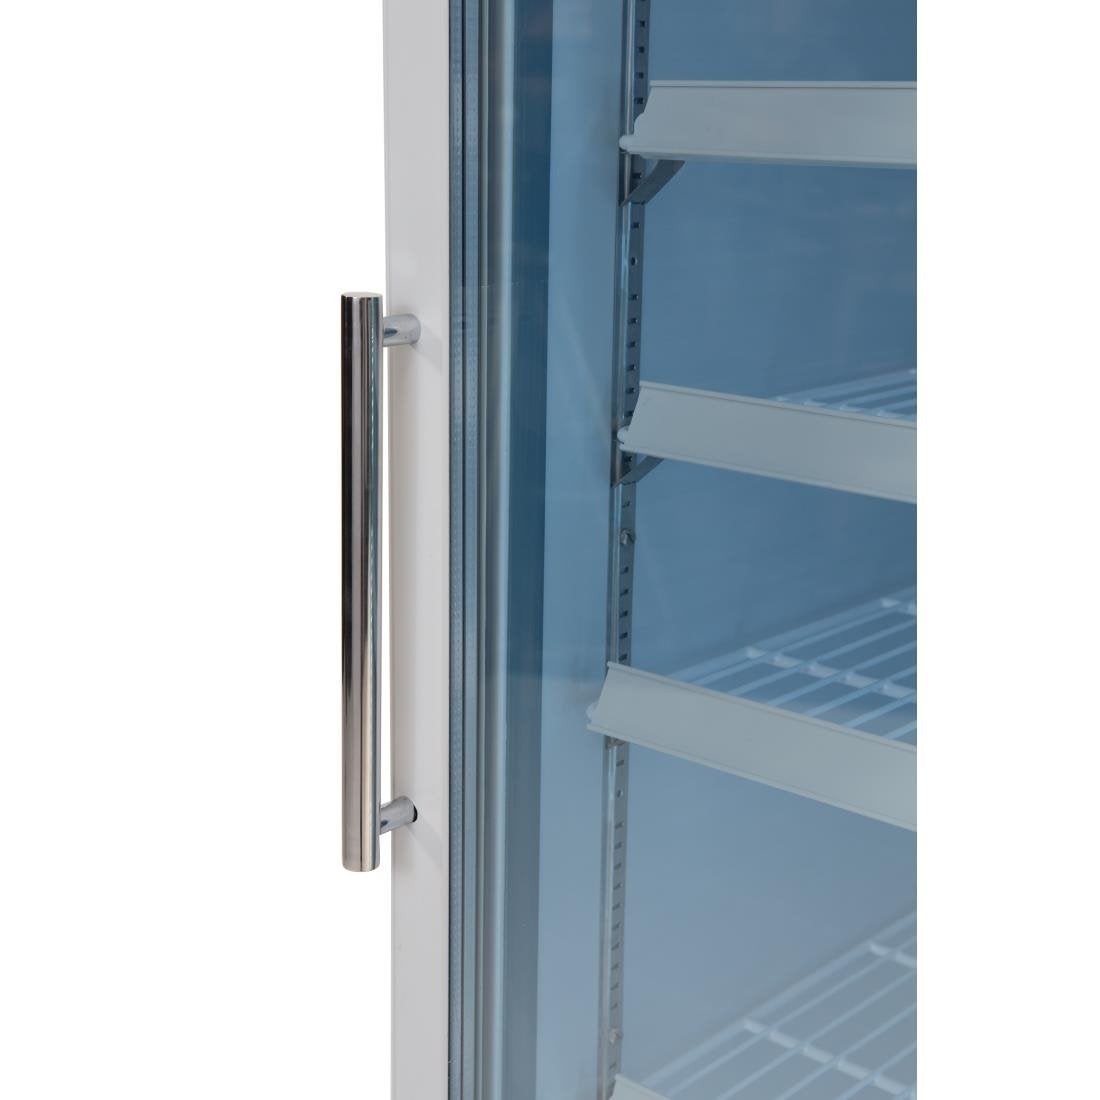 Polar G-Series Upright Display Freezer White 412Ltr GH506-A